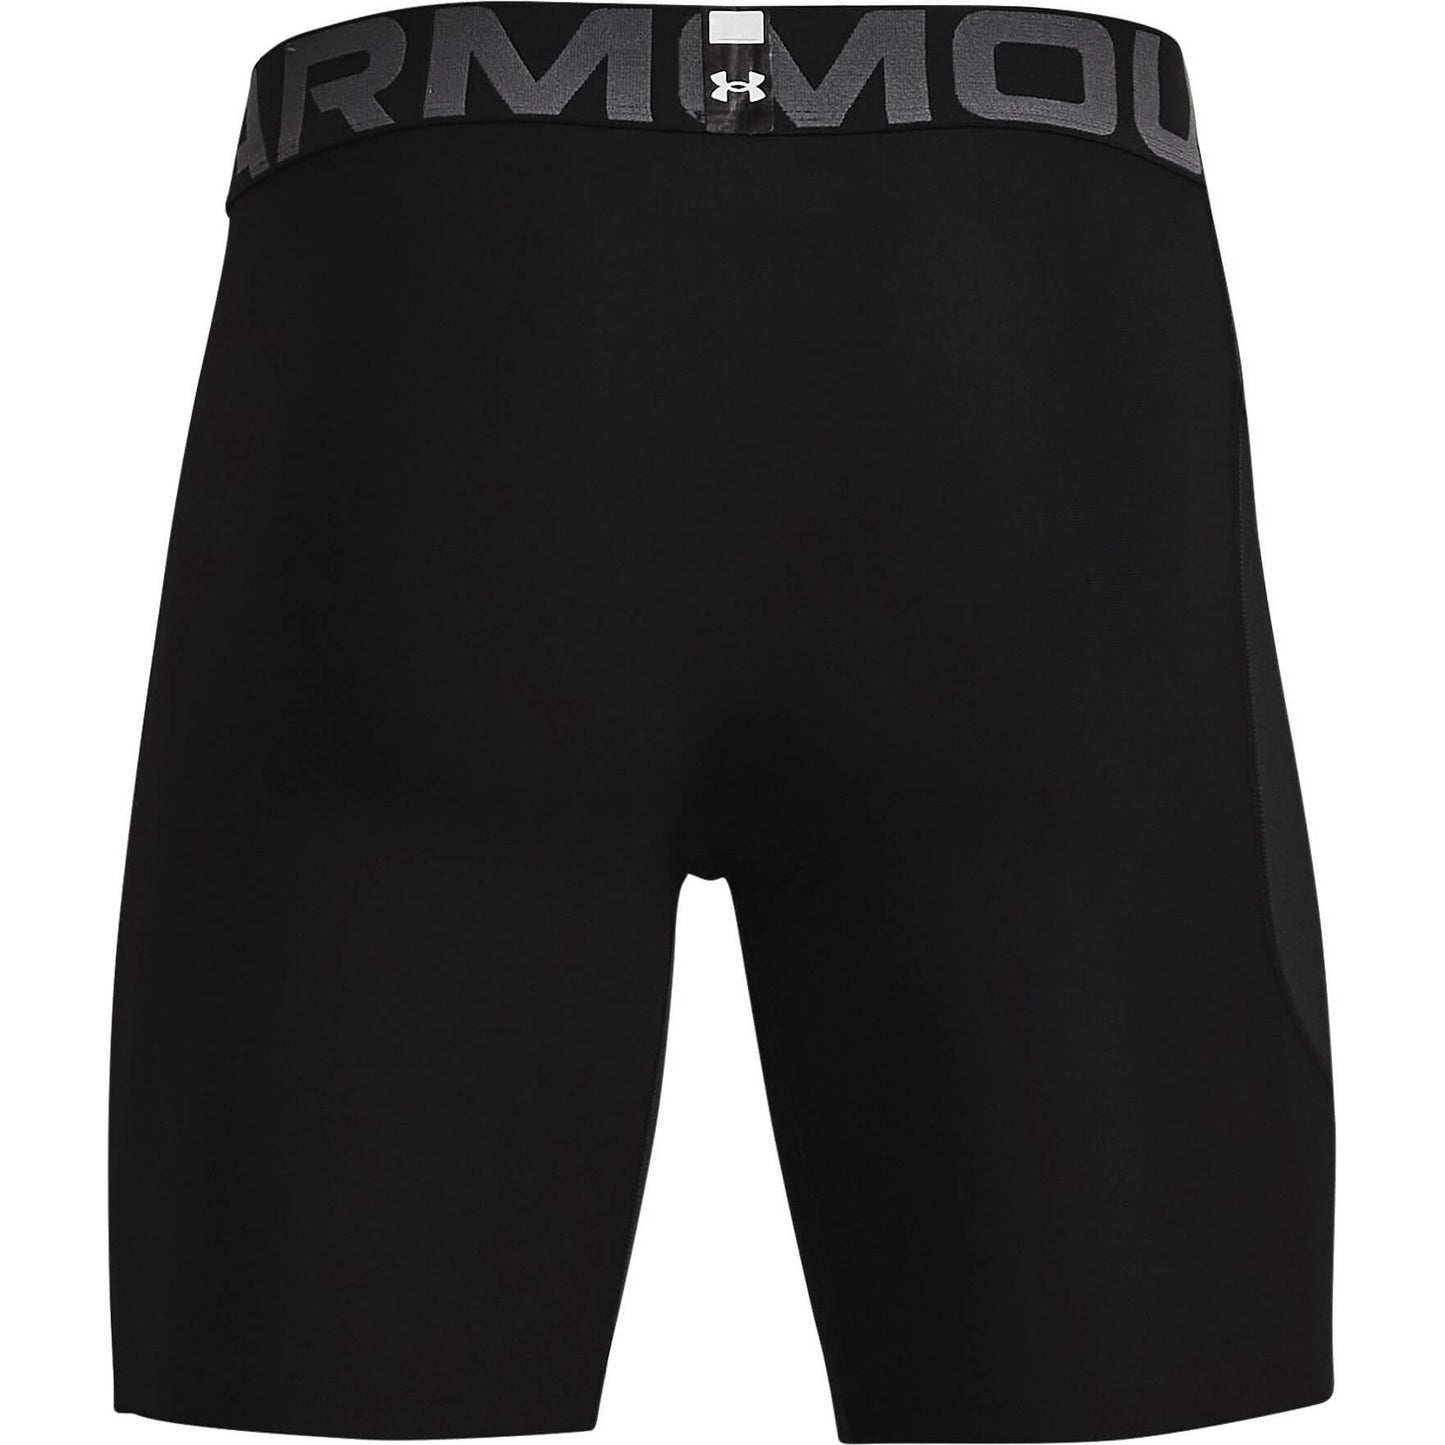 Under Armour Men's HeatGear® Armour Compression Shorts Black / White